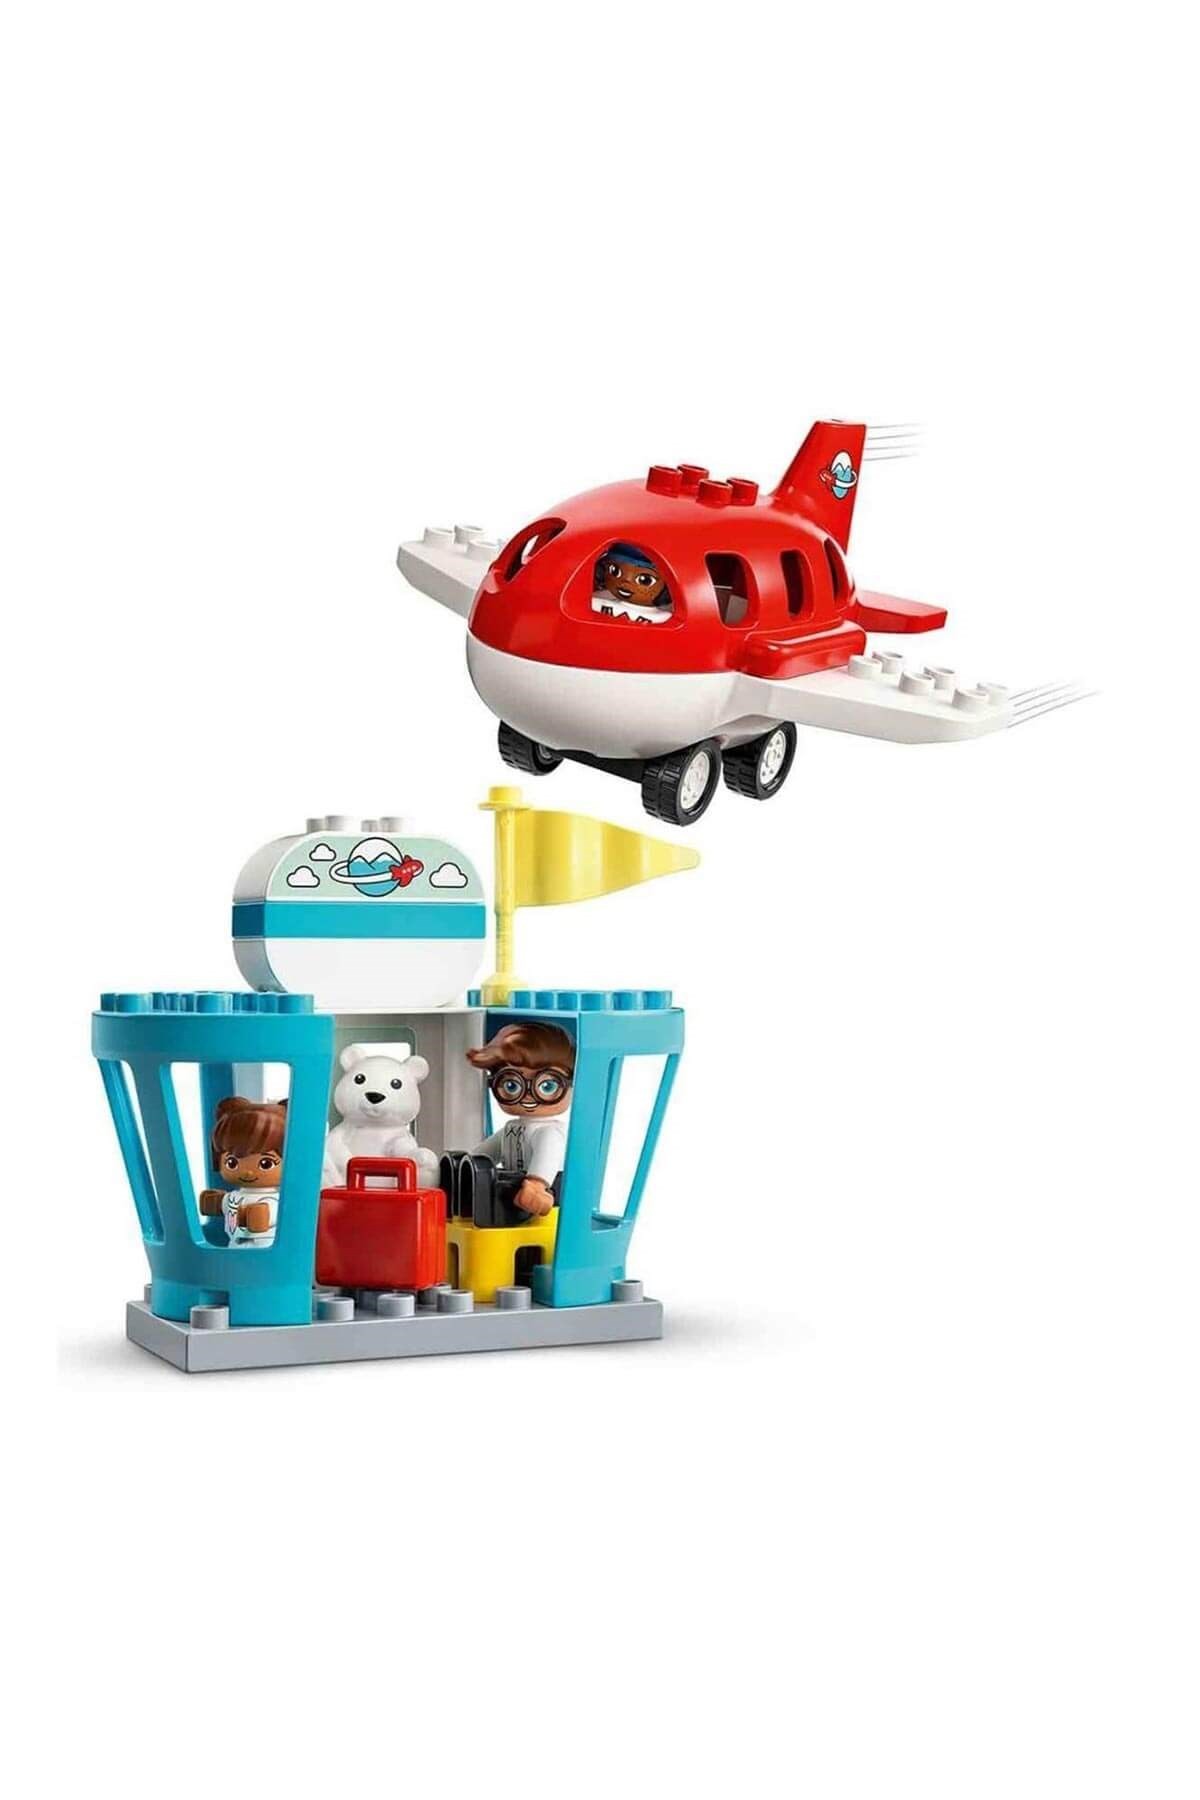 Lego Duplo Airplane & Airport